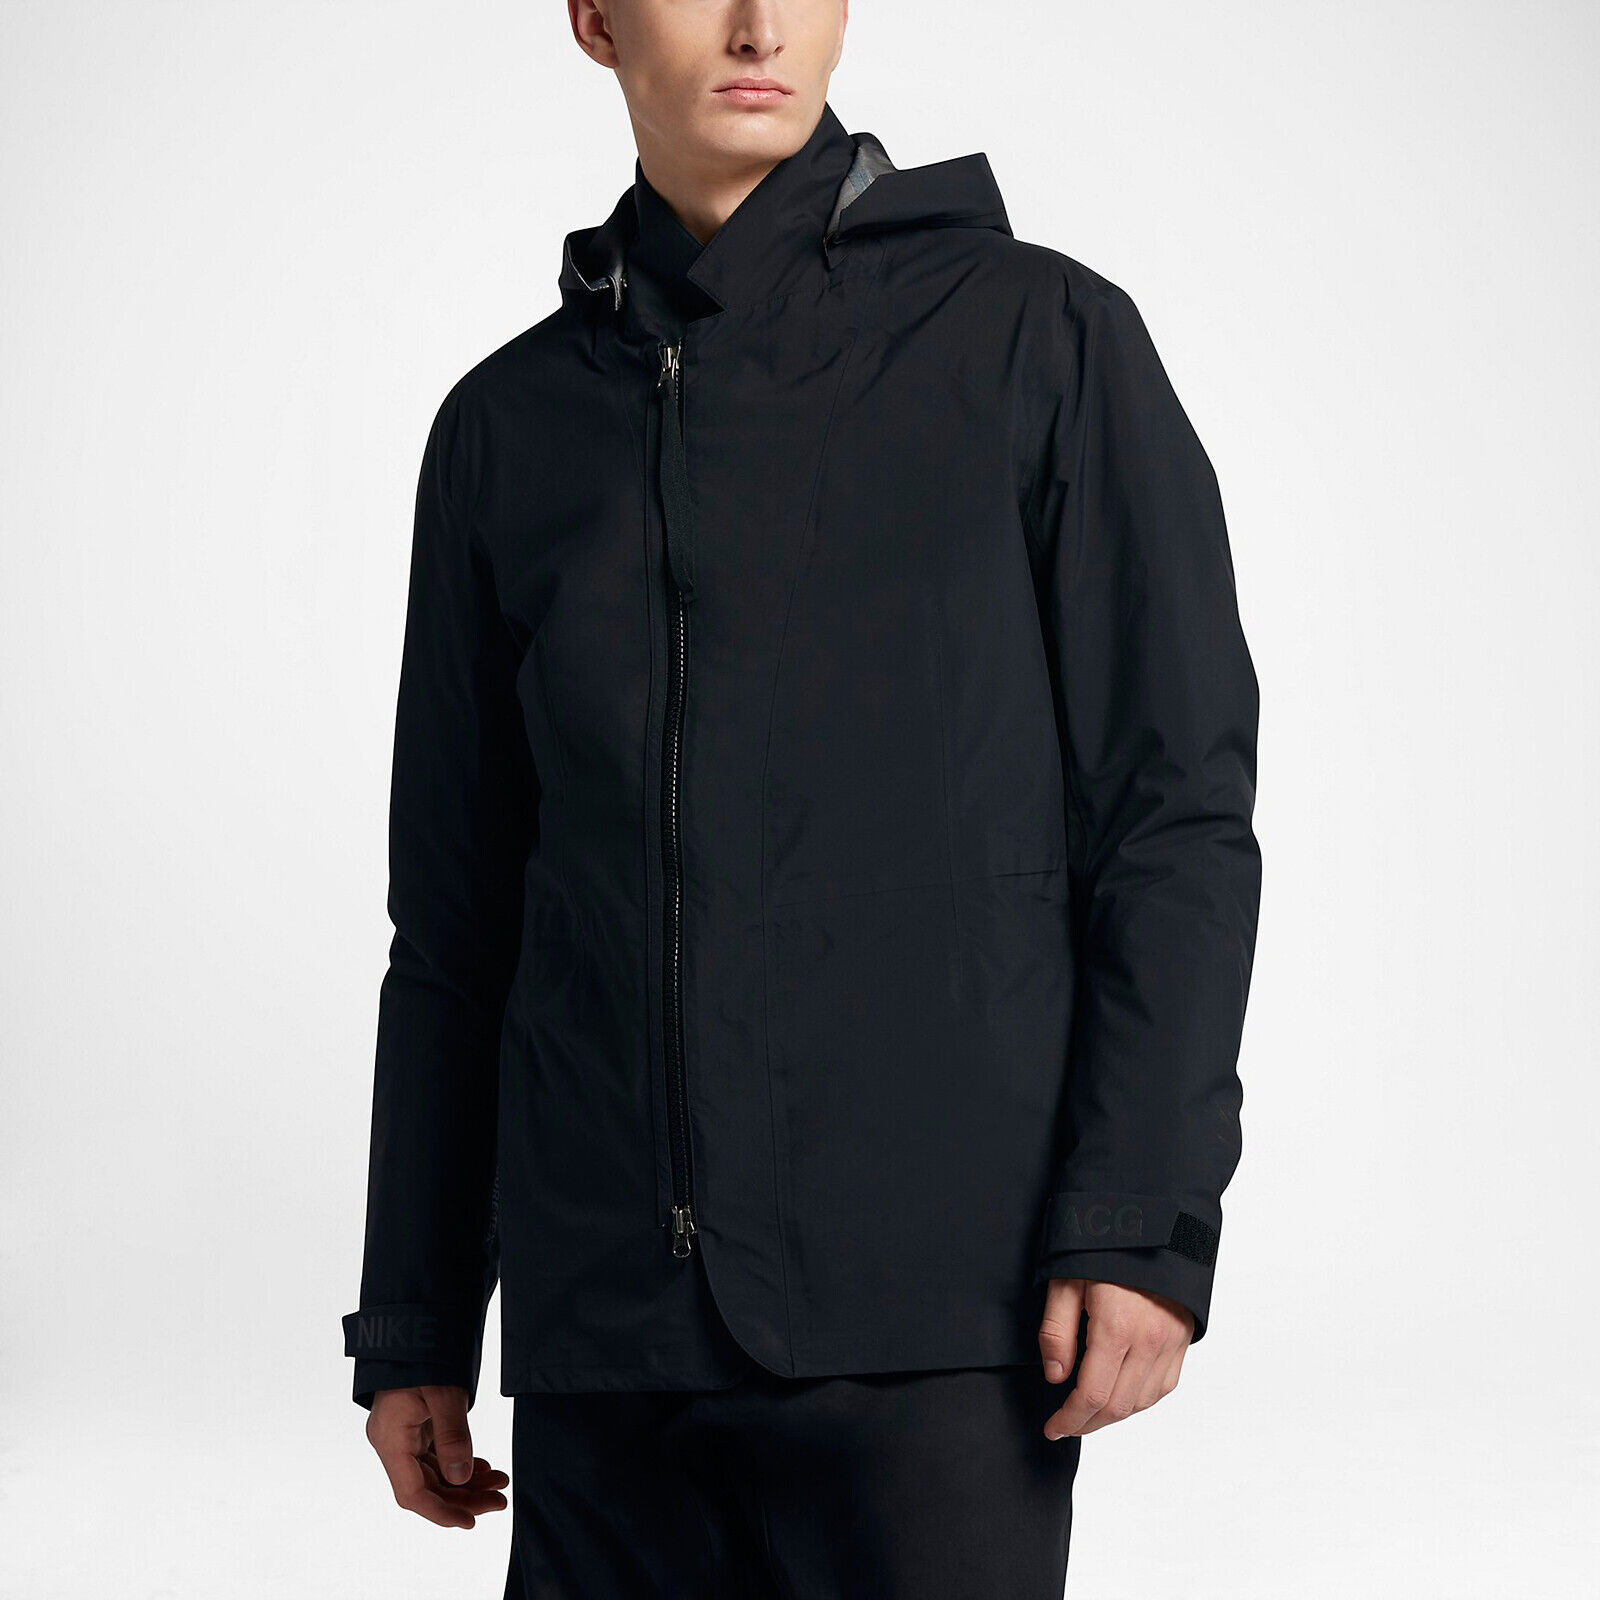 Nike Lab ACG gore tex System Blazer 3 in 1 Jacket S Black Small Acronym  Errolson